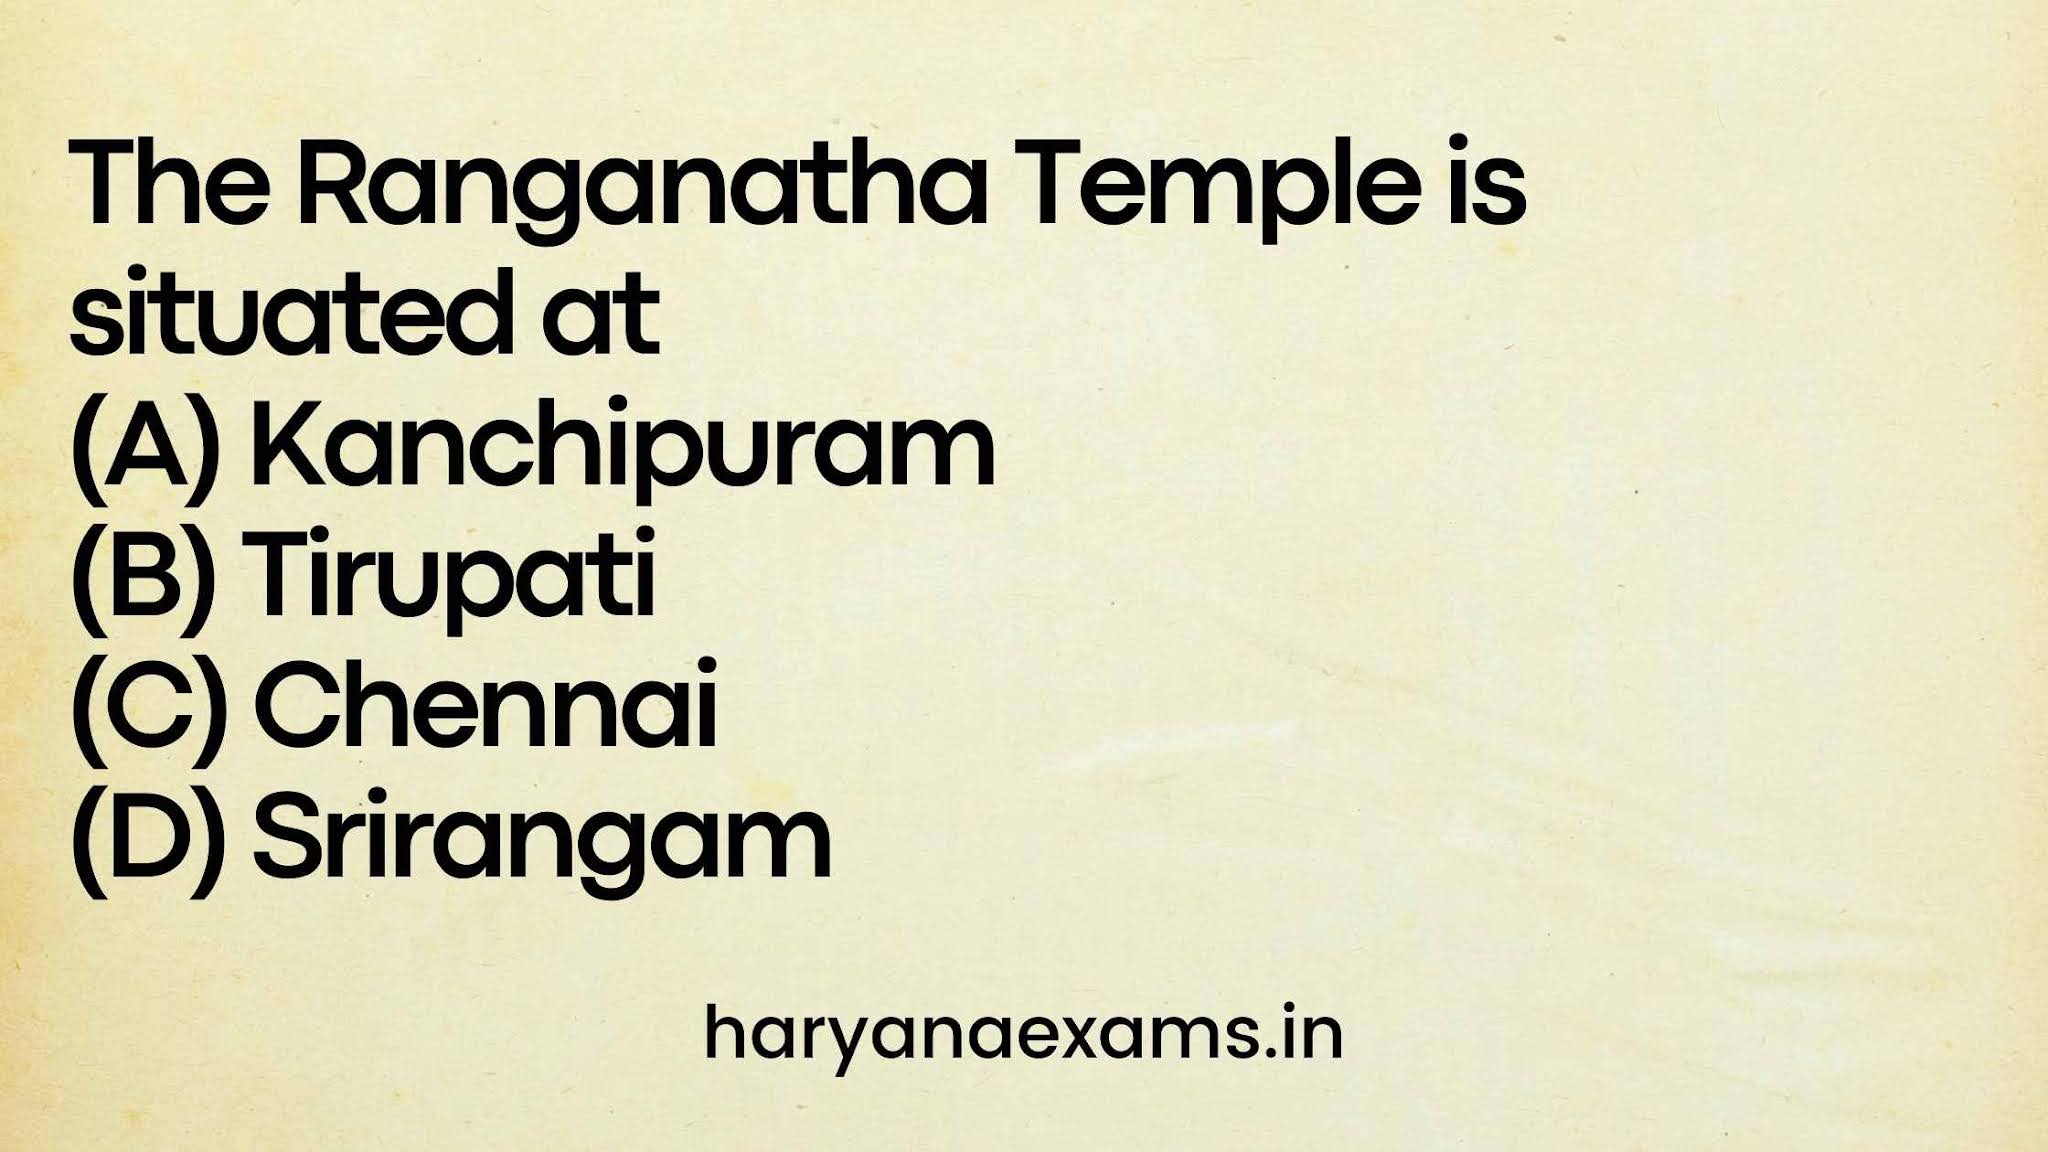 The Ranganatha Temple is situated at (A) Kanchipuram (B) Tirupati (C) Chennai (D) Srirangam